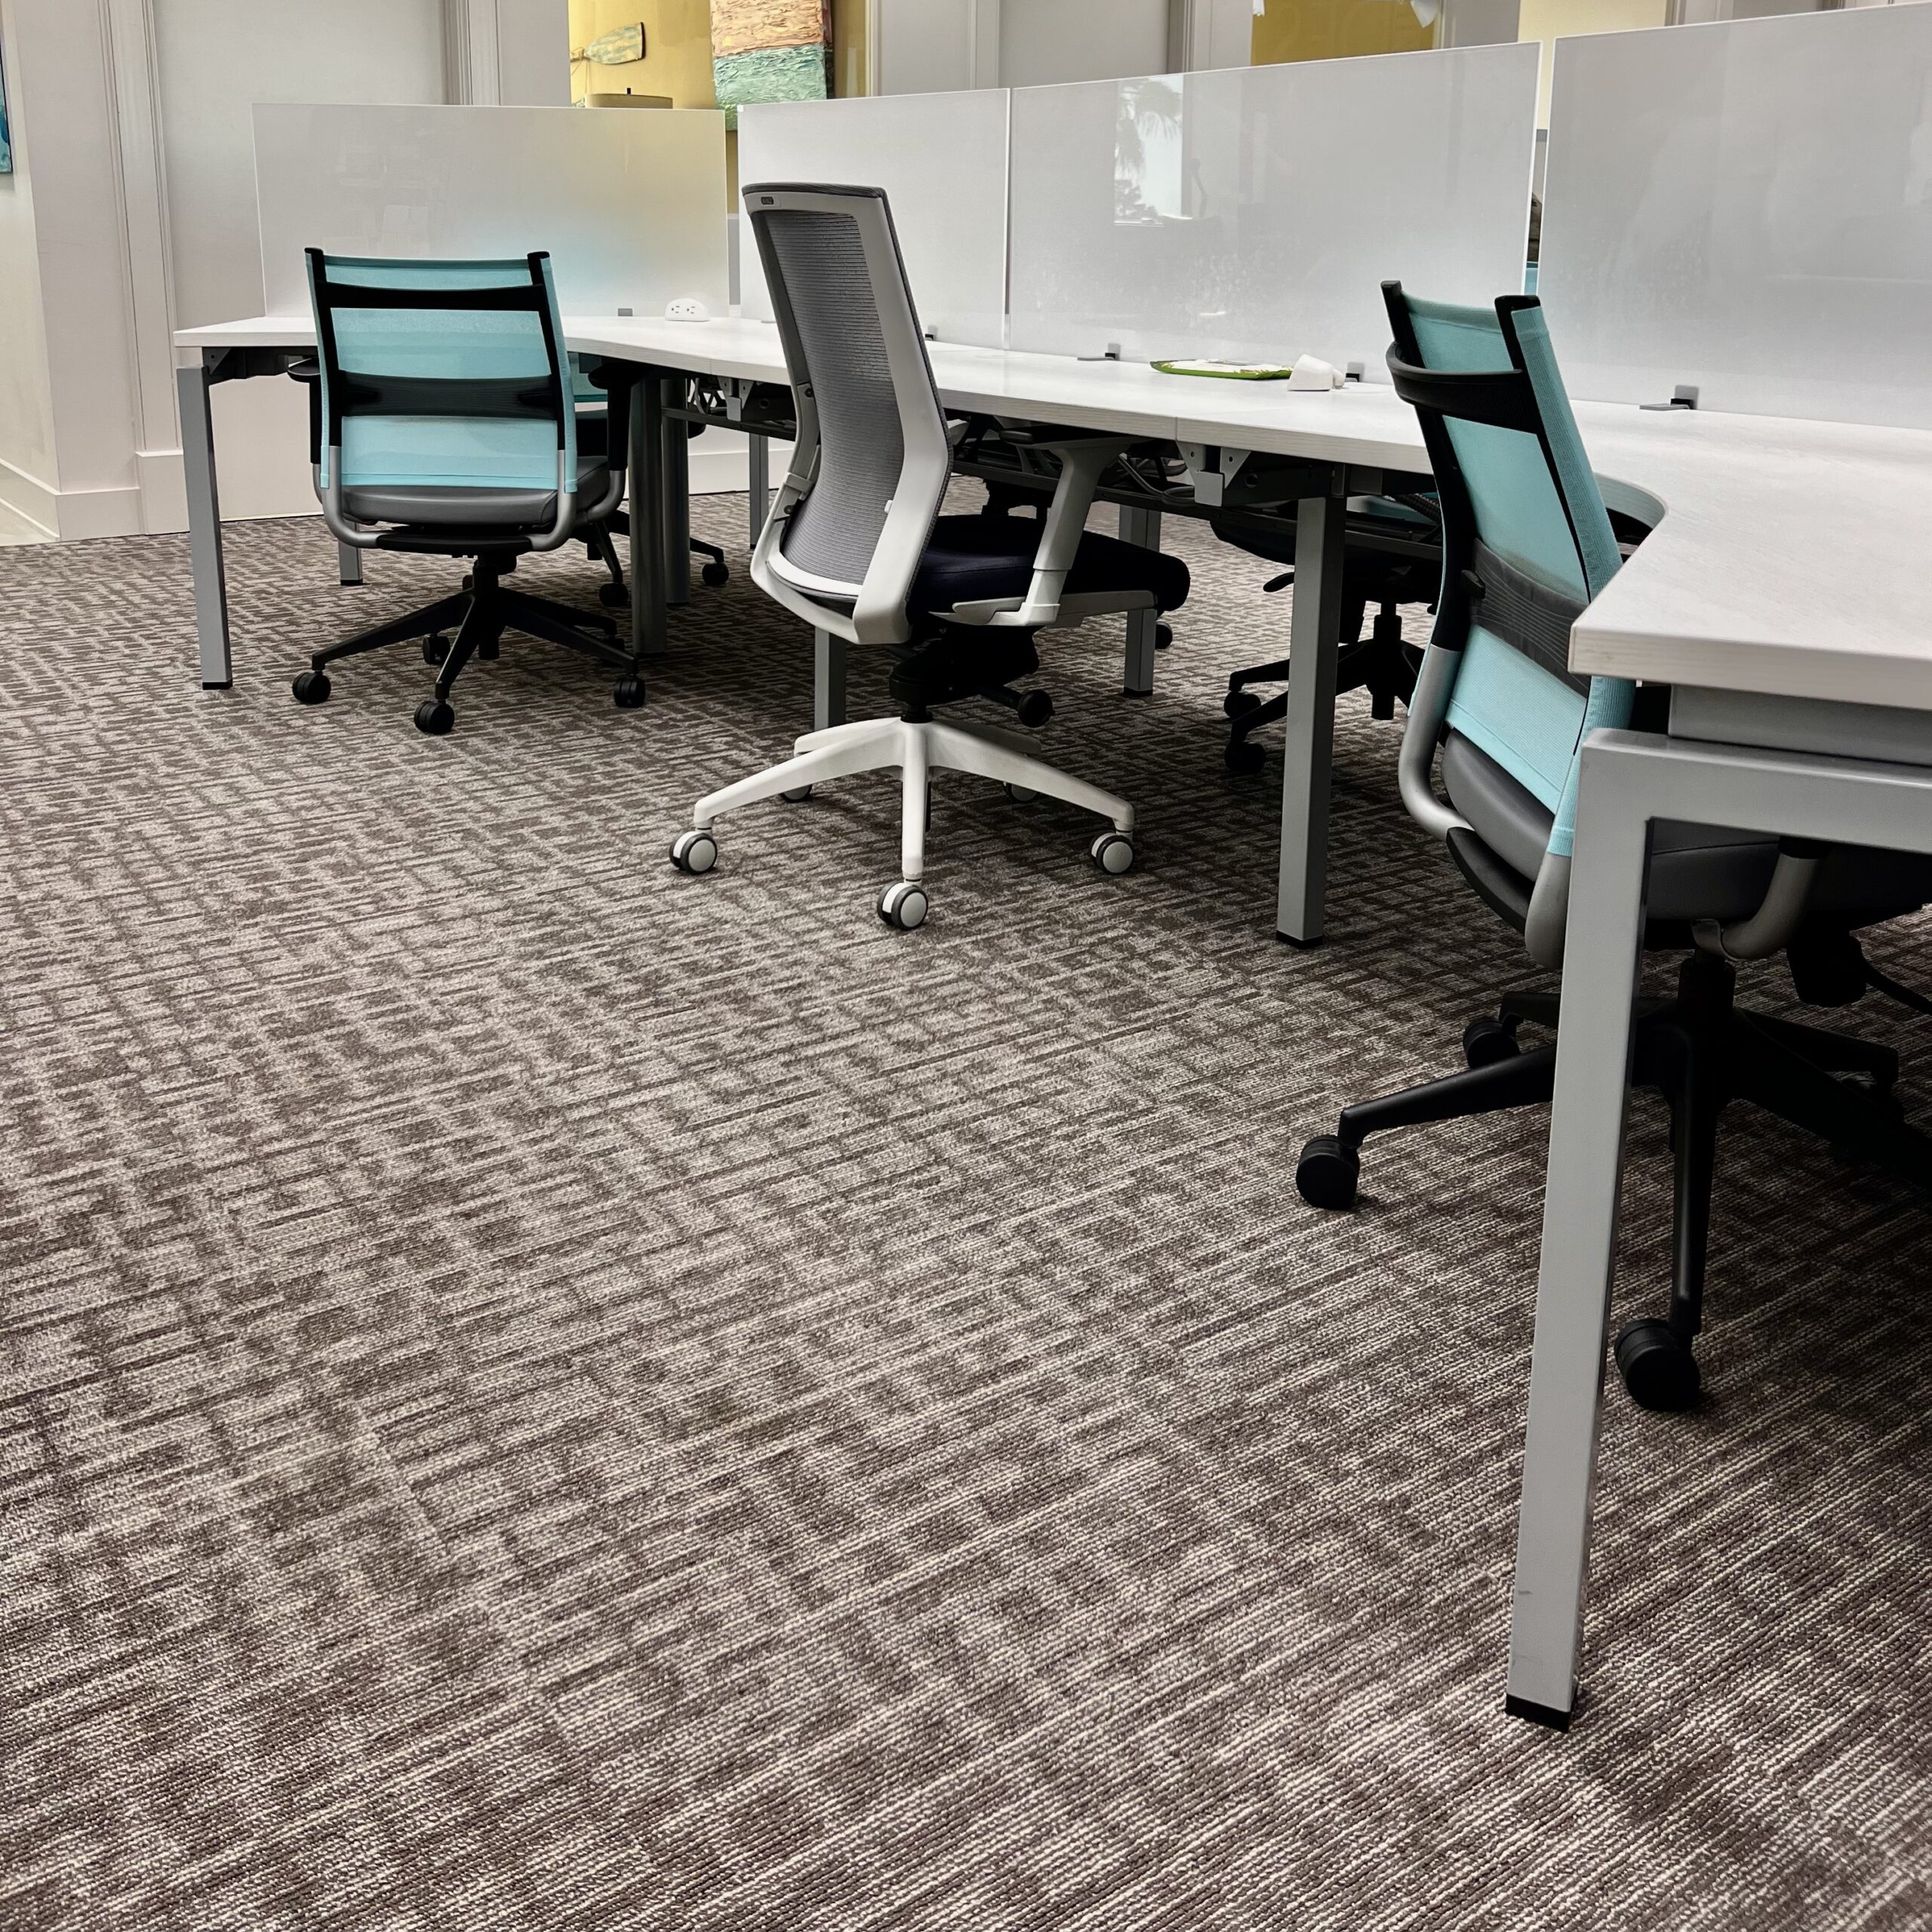 Office remodel carpet tiles